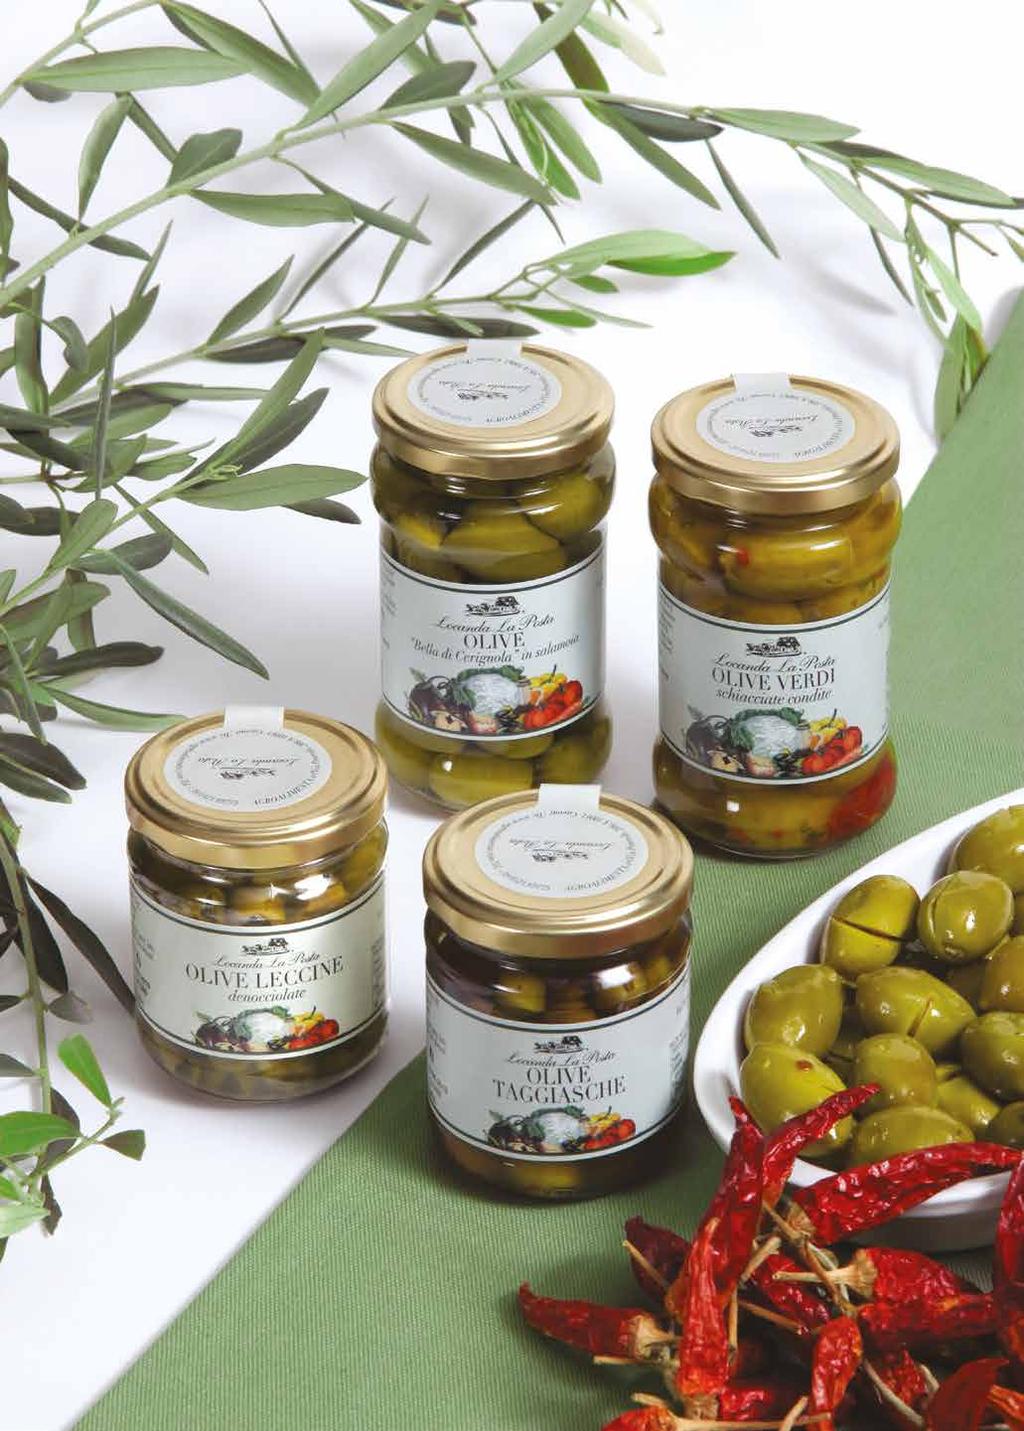 Olives 00200 Bella di Cerignola olive in brine 00203 Crushed and seasoned